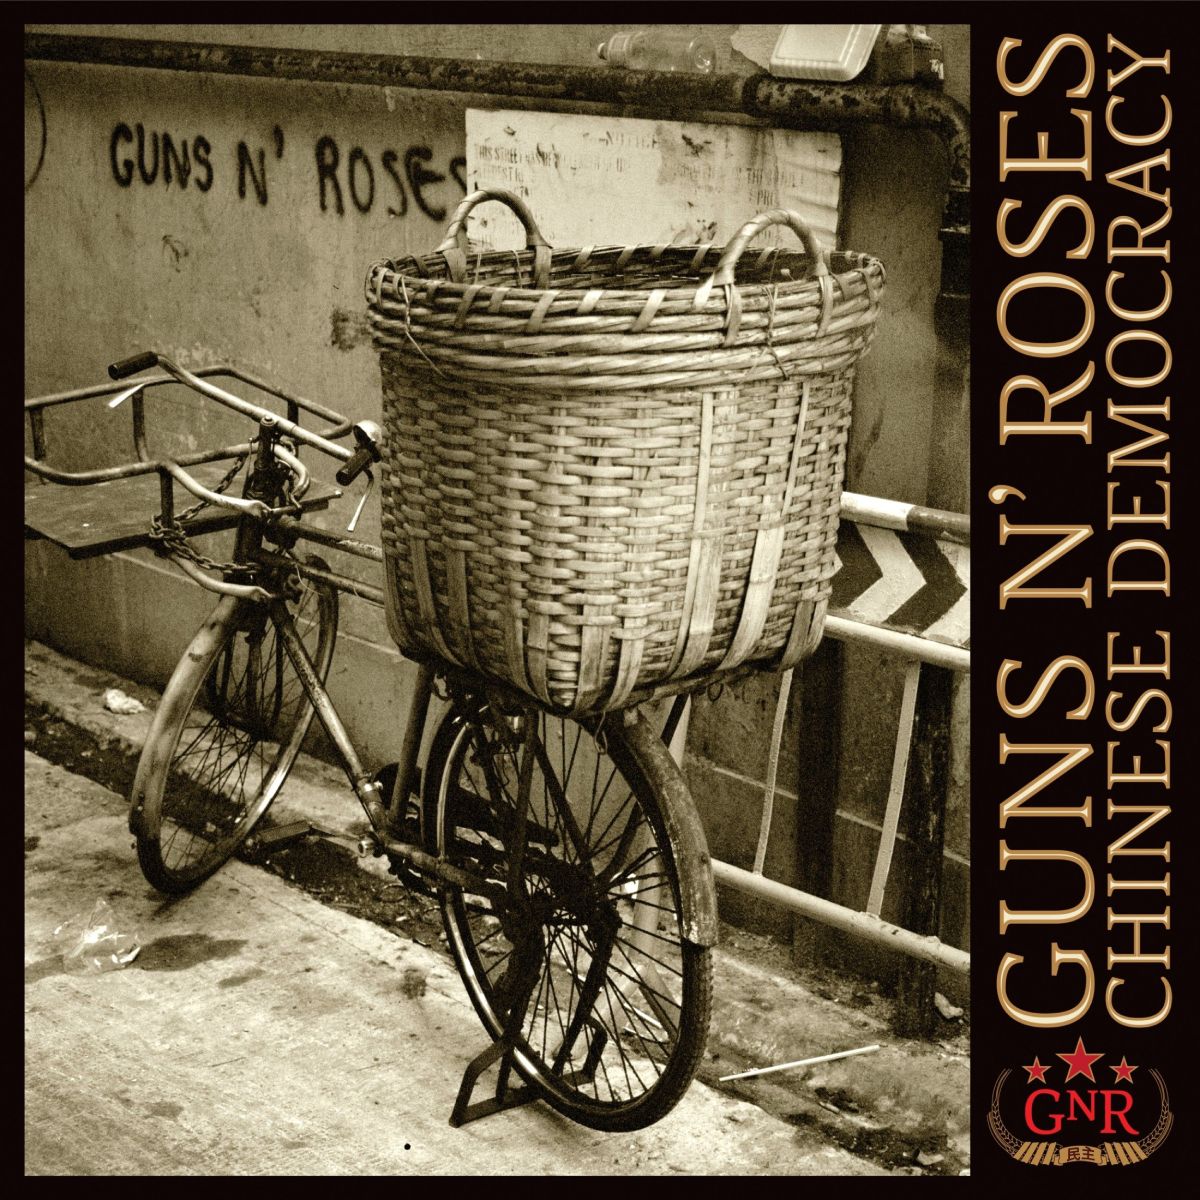 Guns N' Roses, álbum "Chinese Democracy